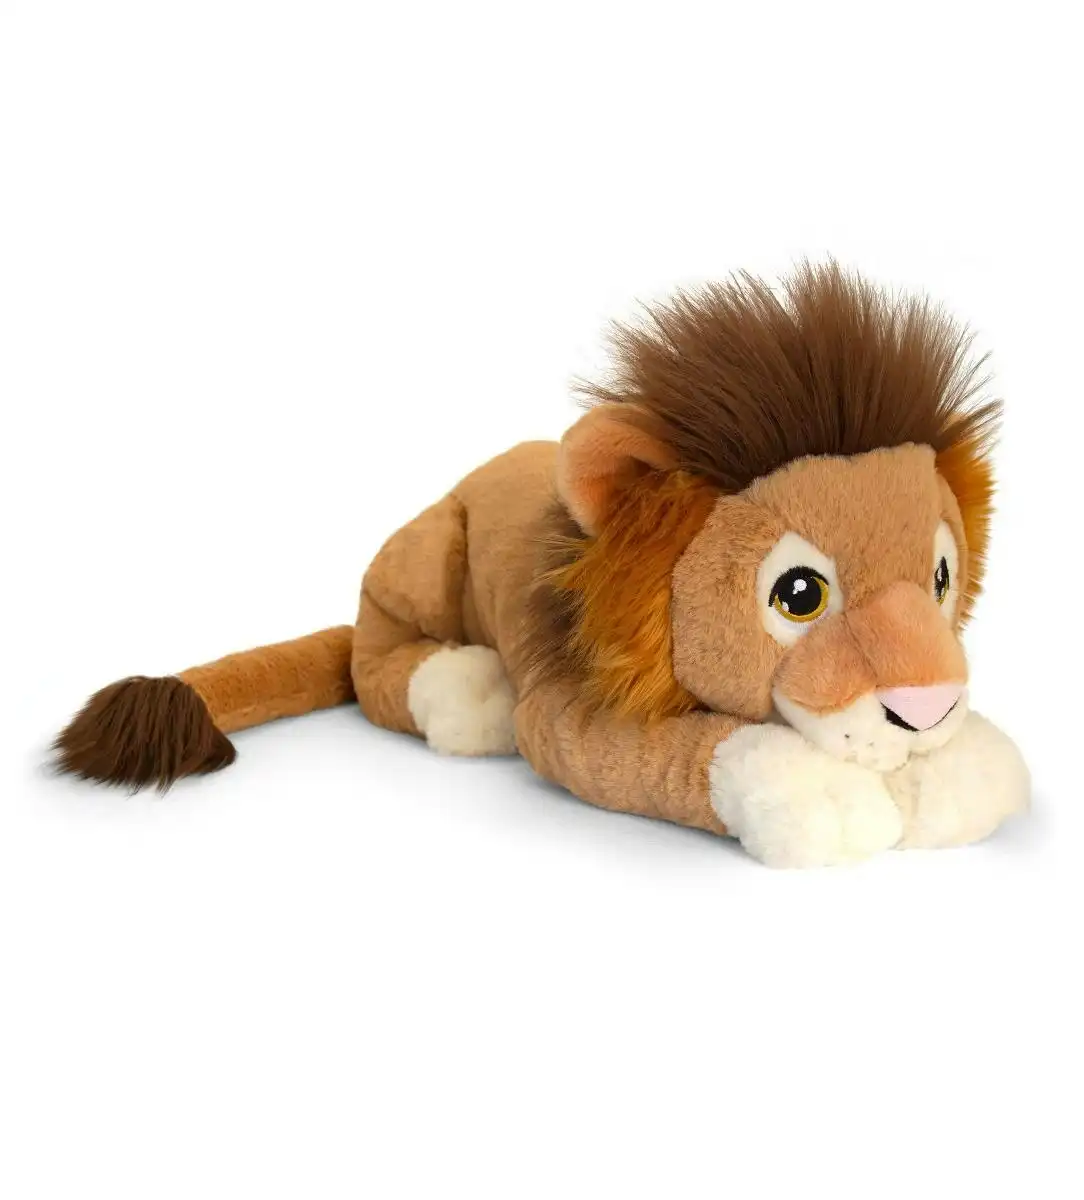 Keeleco 45cm Lion Kids/Children/Toddler Animal Soft Plush Stuffed Toy Brown 3y+